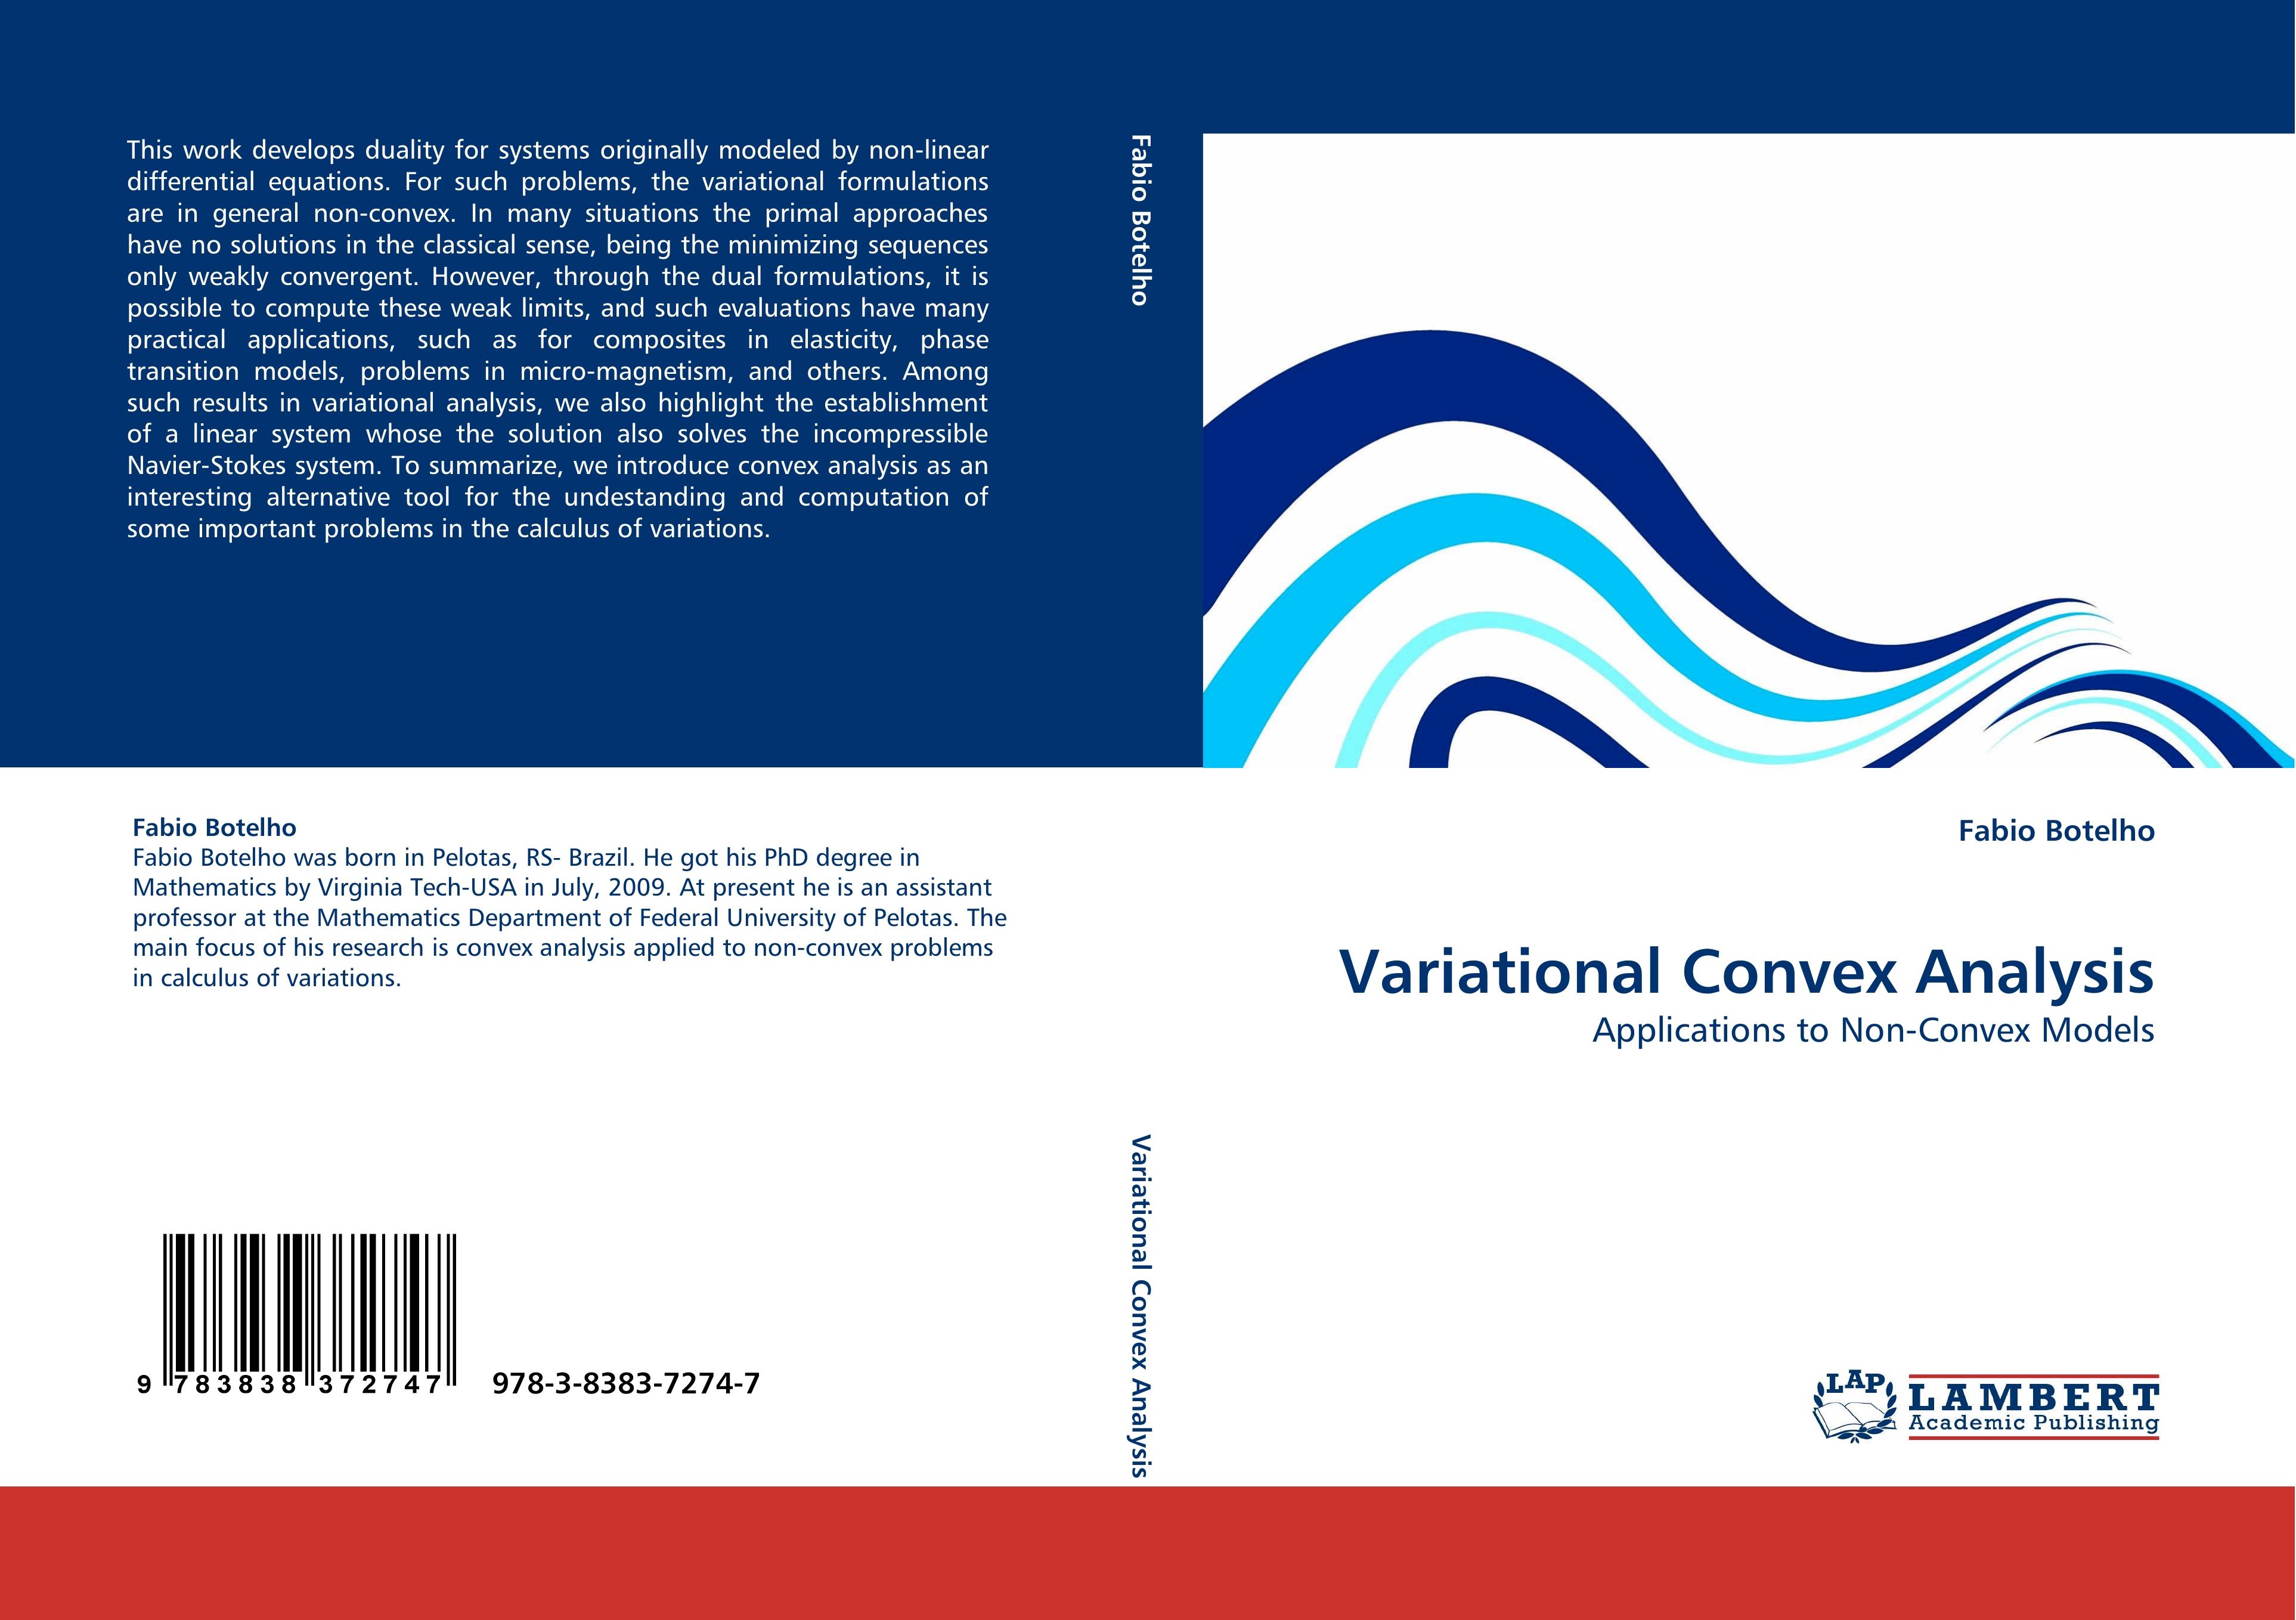 Variational Convex Analysis / Applications to Non-Convex Models / Fabio Botelho / Taschenbuch / Paperback / 264 S. / Englisch / 2010 / LAP LAMBERT Academic Publishing / EAN 9783838372747 - Botelho, Fabio